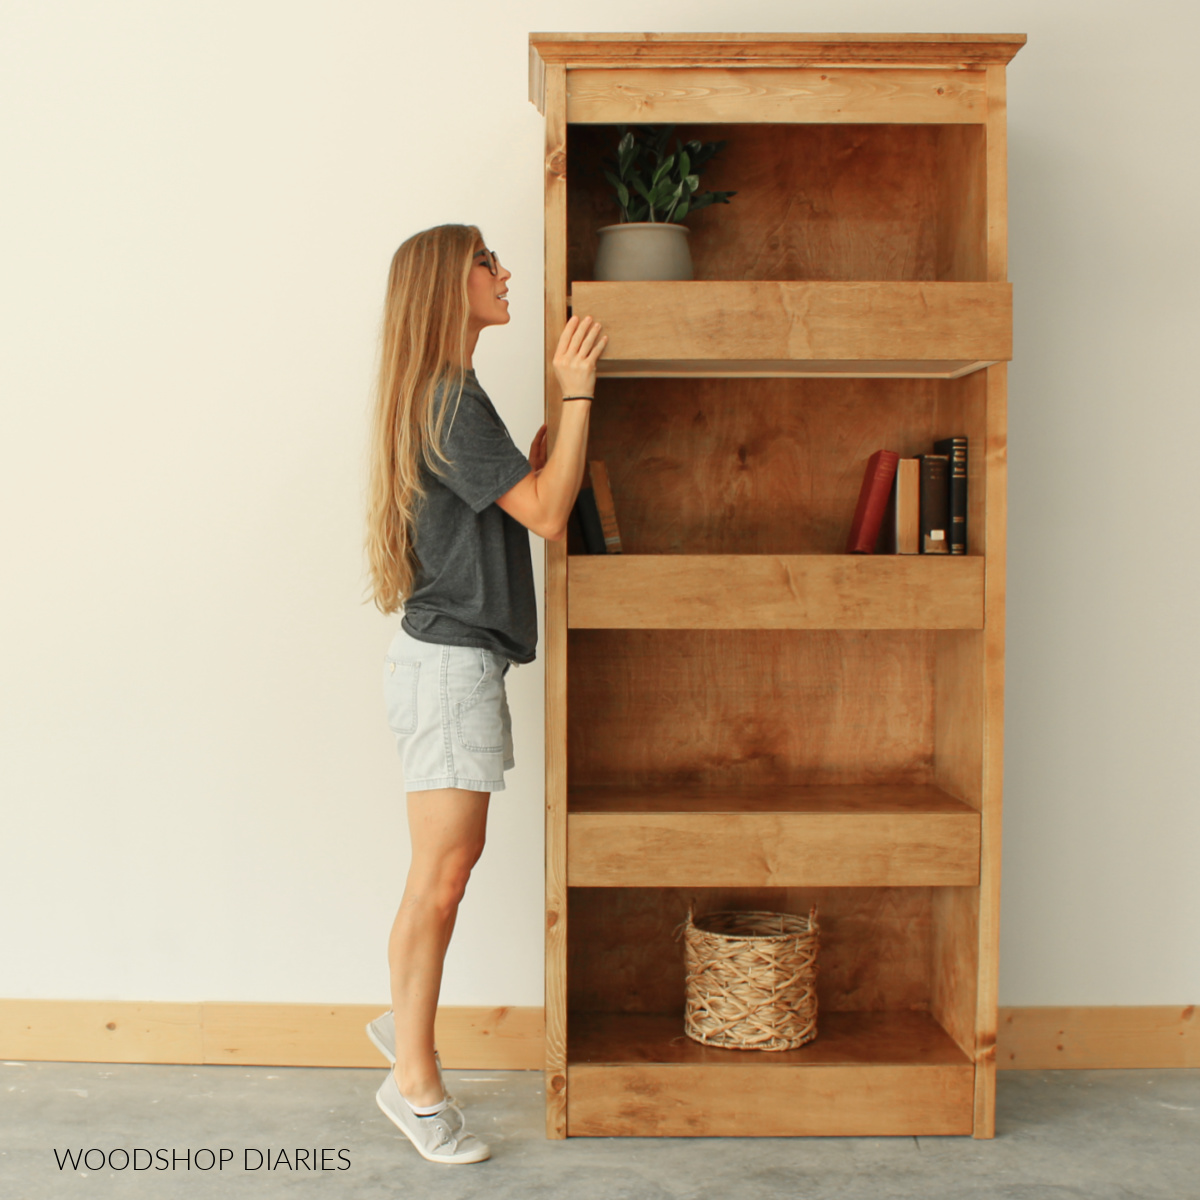 Shara Woodshop Diaries looking inside top drawer of bookshelf with hidden storage